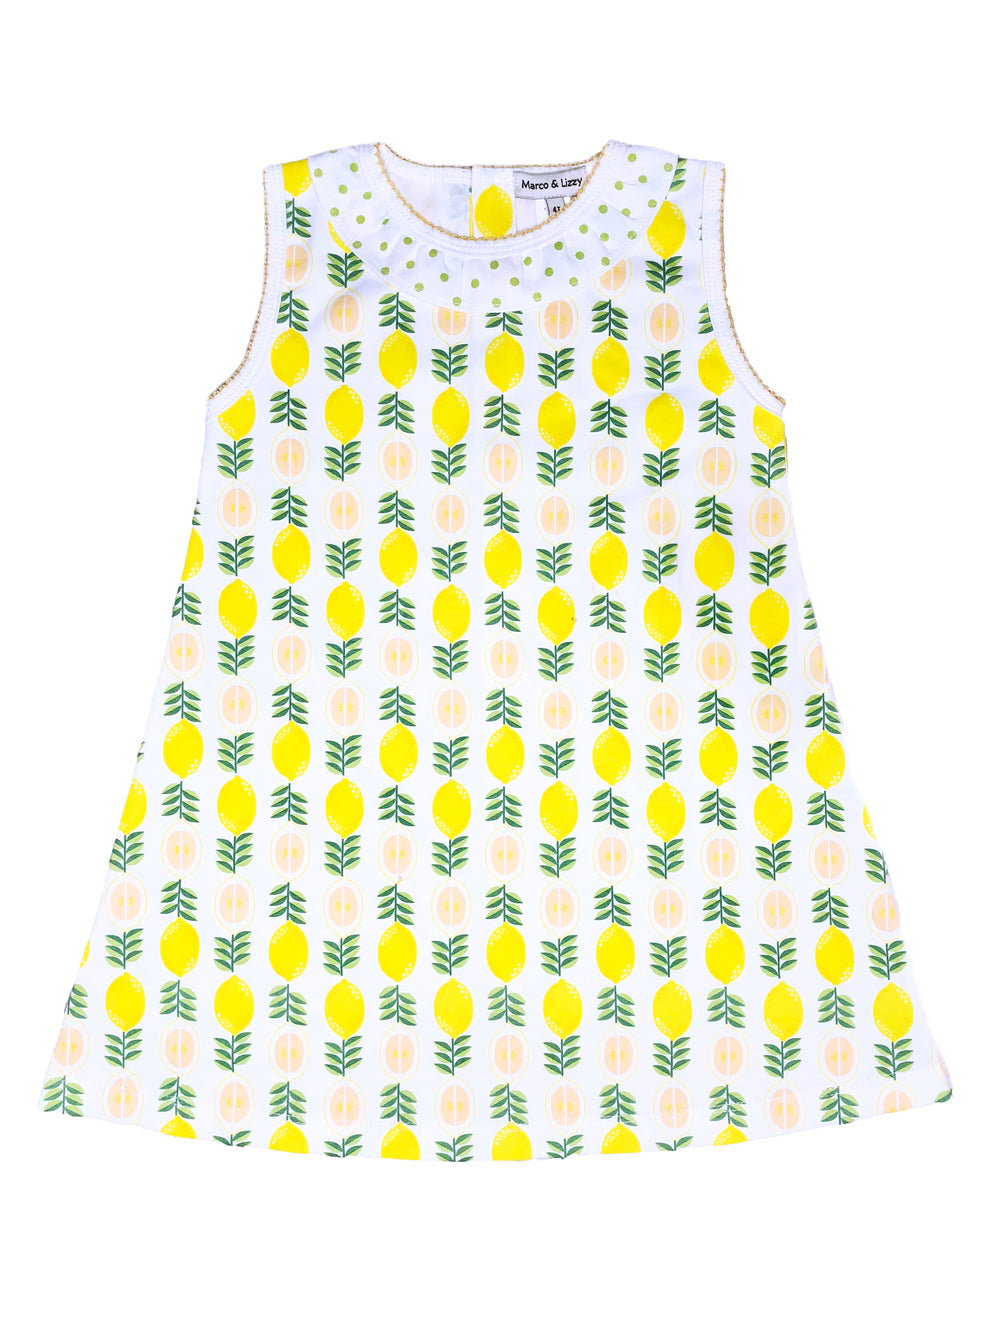 Lemonade Stand Pima Print A Line Dress